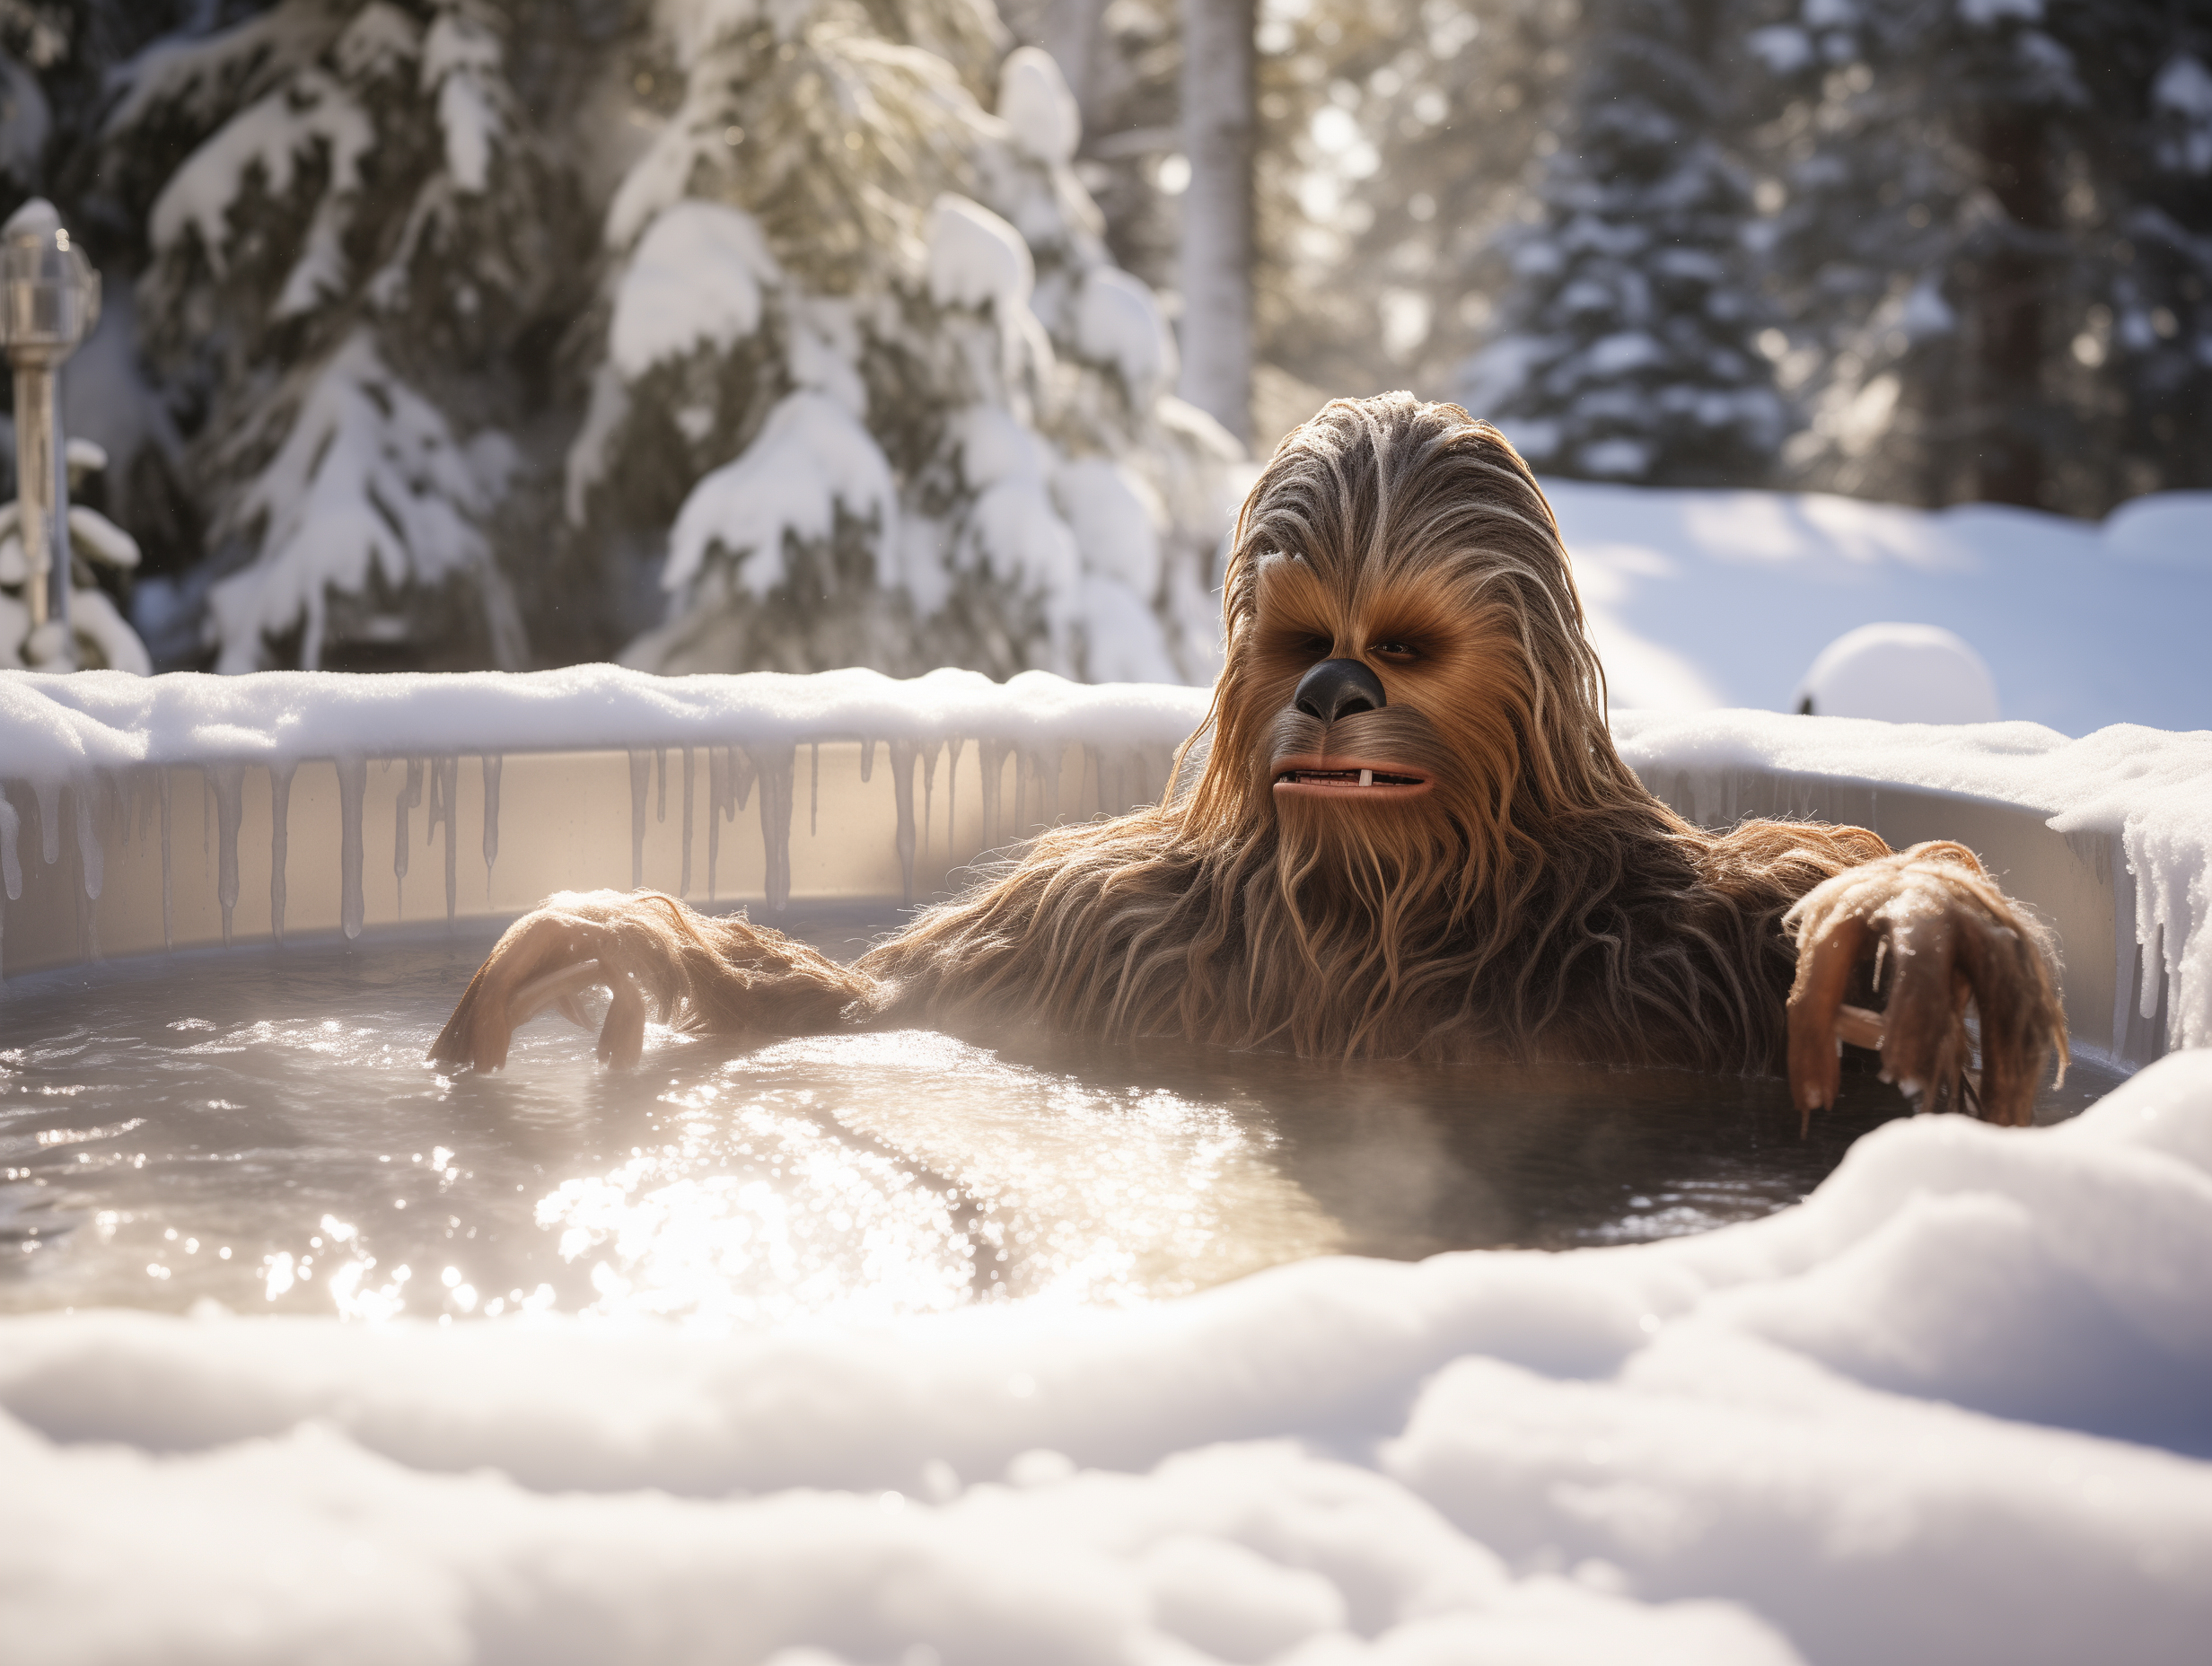 Midjourney v 5.2 rendering of Chewbacca in hot tub